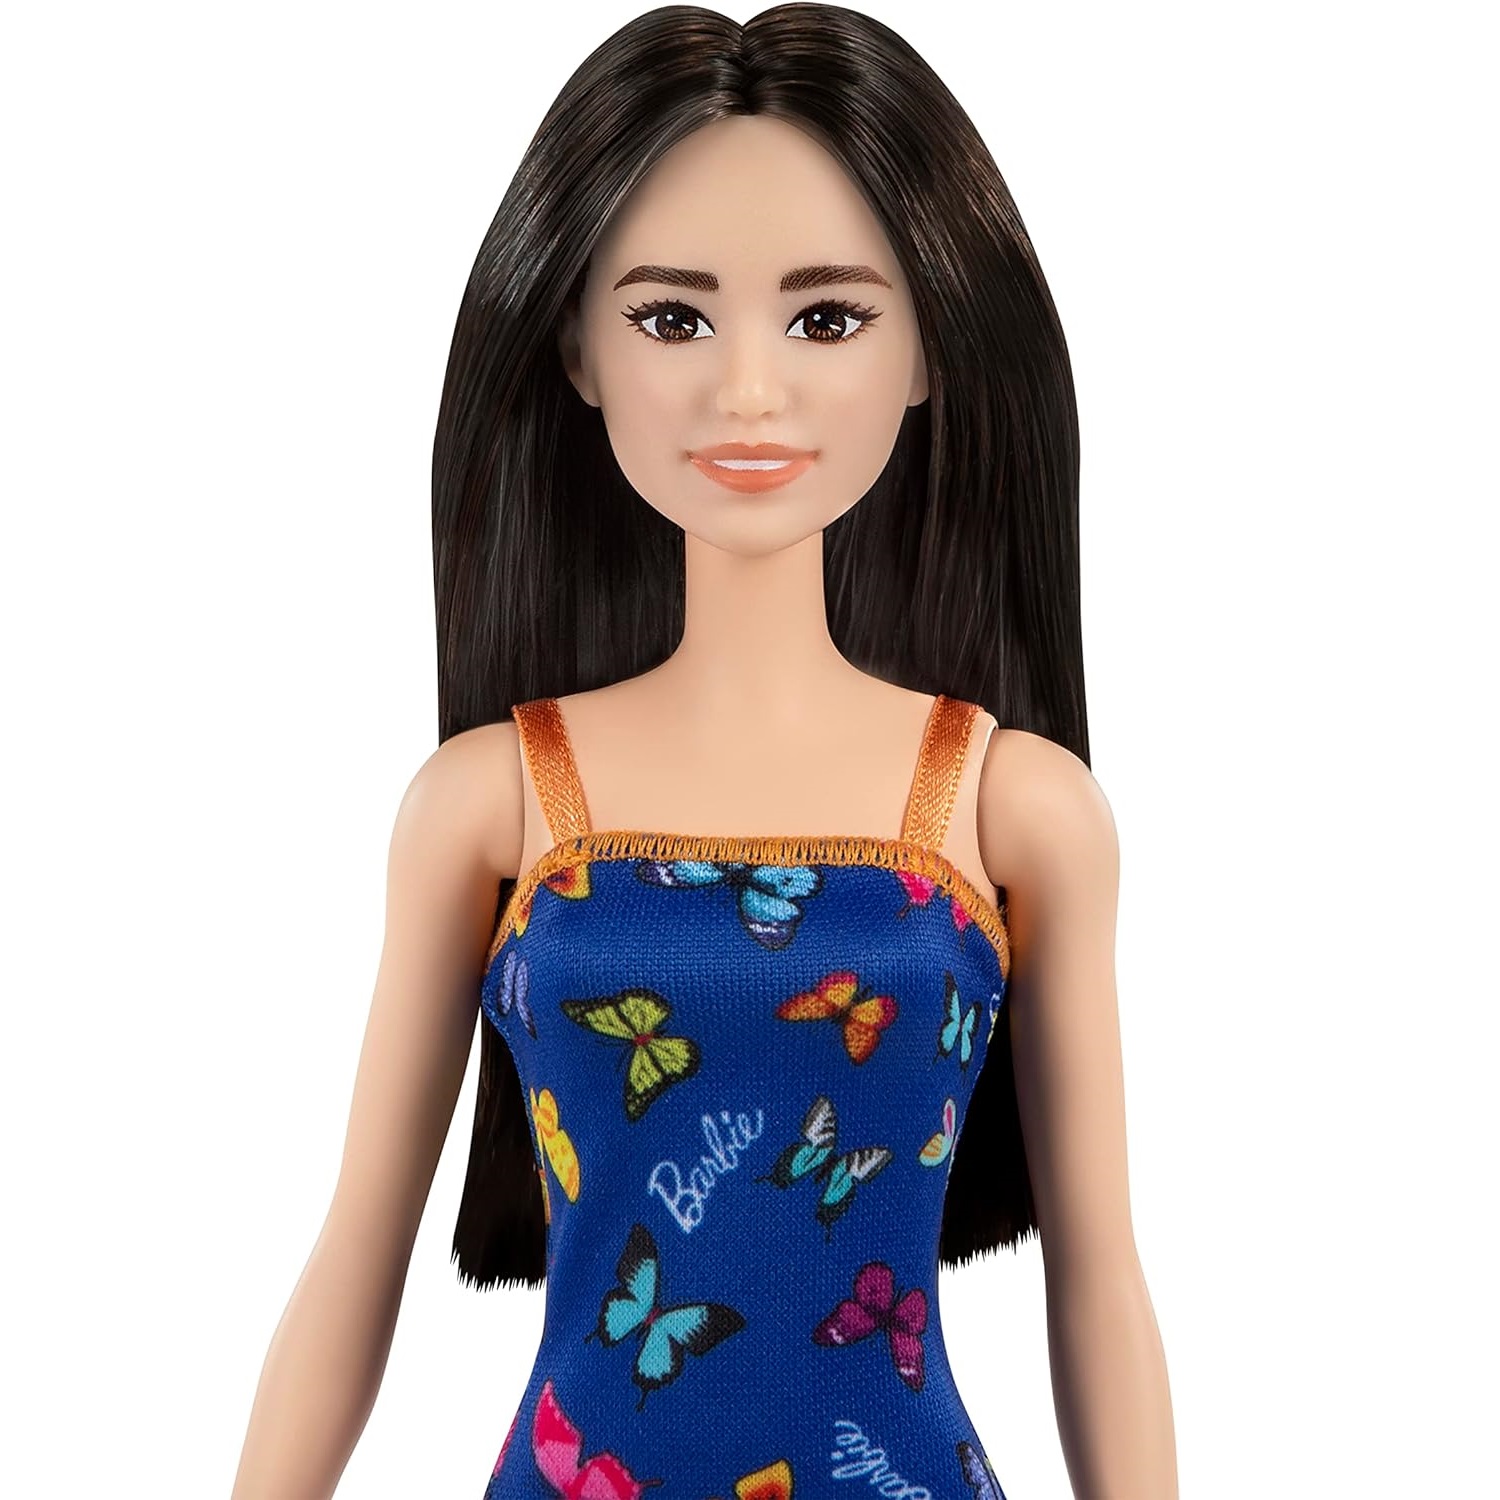 Кукла Barbie HBV06 в платье